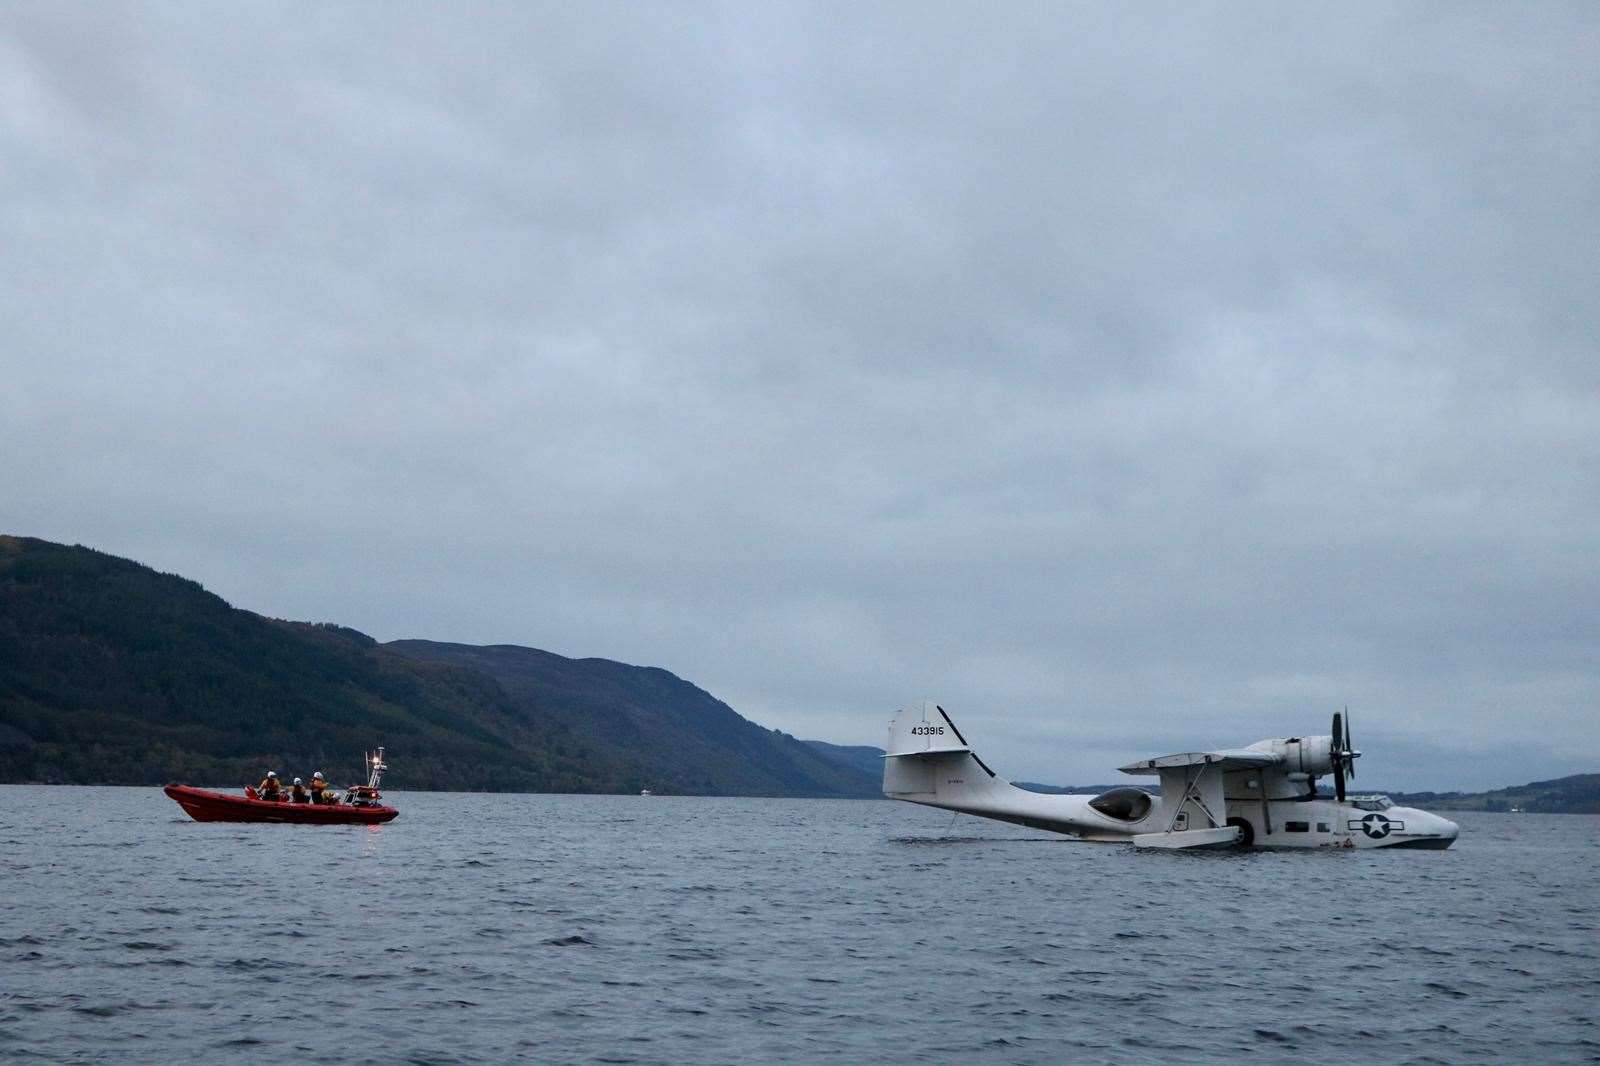 Loch Ness RNLI stranded plane Kirsten Dawn Ferguson